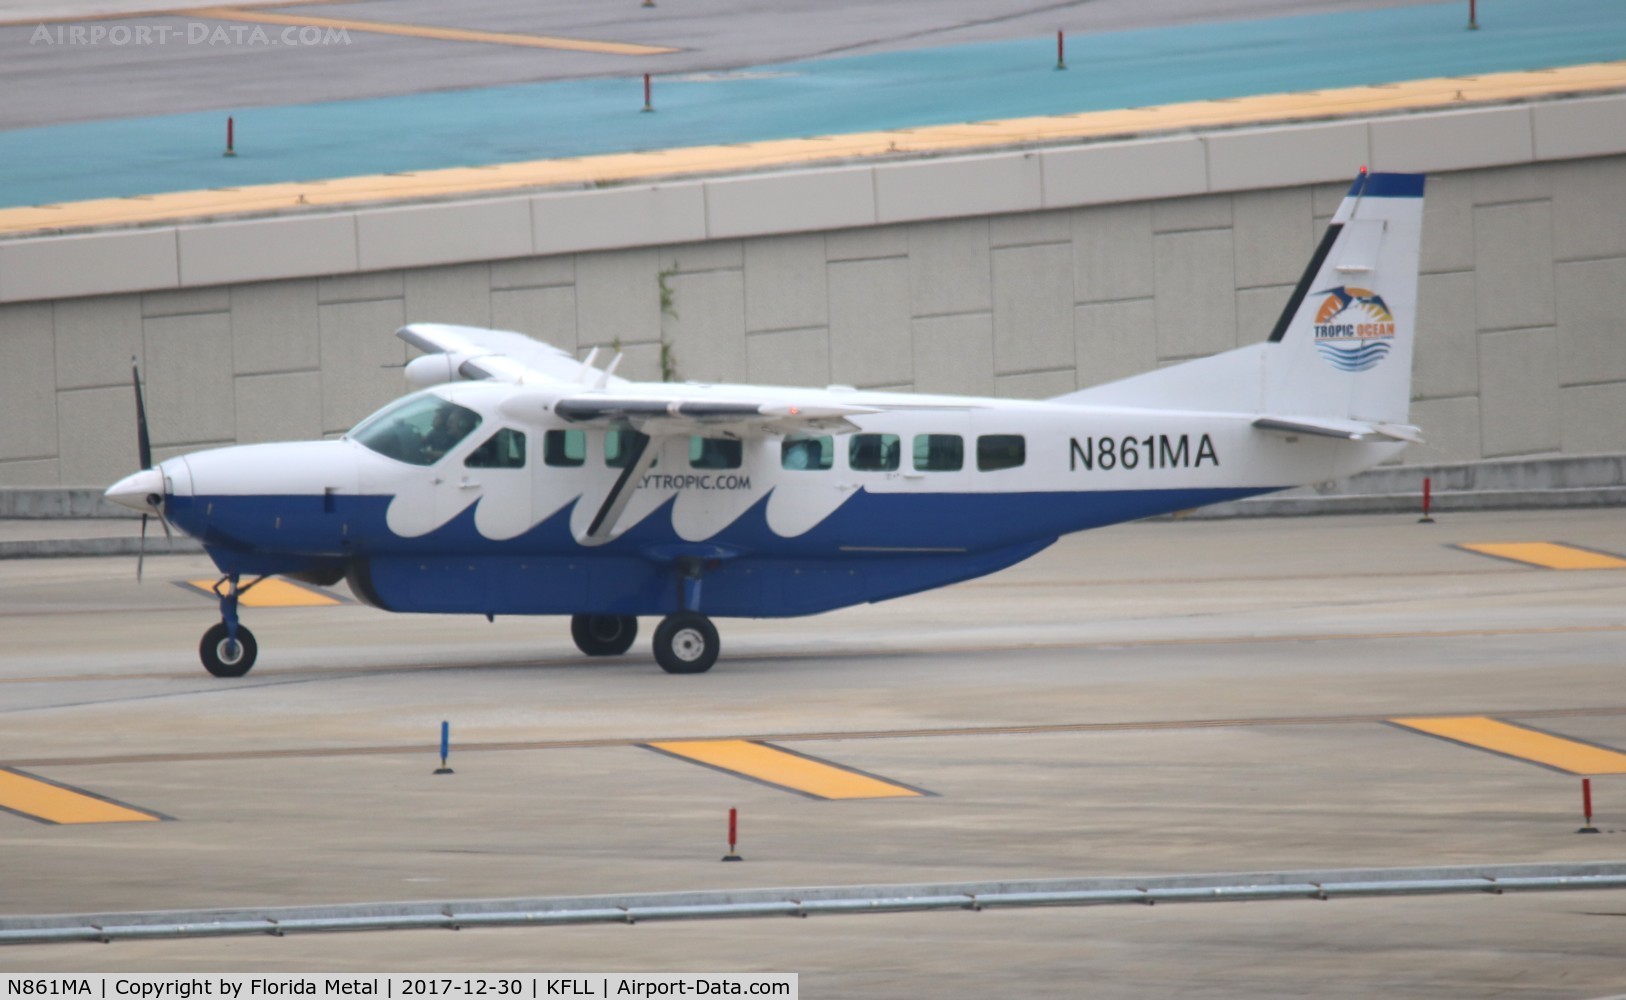 N861MA, 2000 Cessna 208B Grand Caravan C/N 208B-0825, FLL spotting 2017